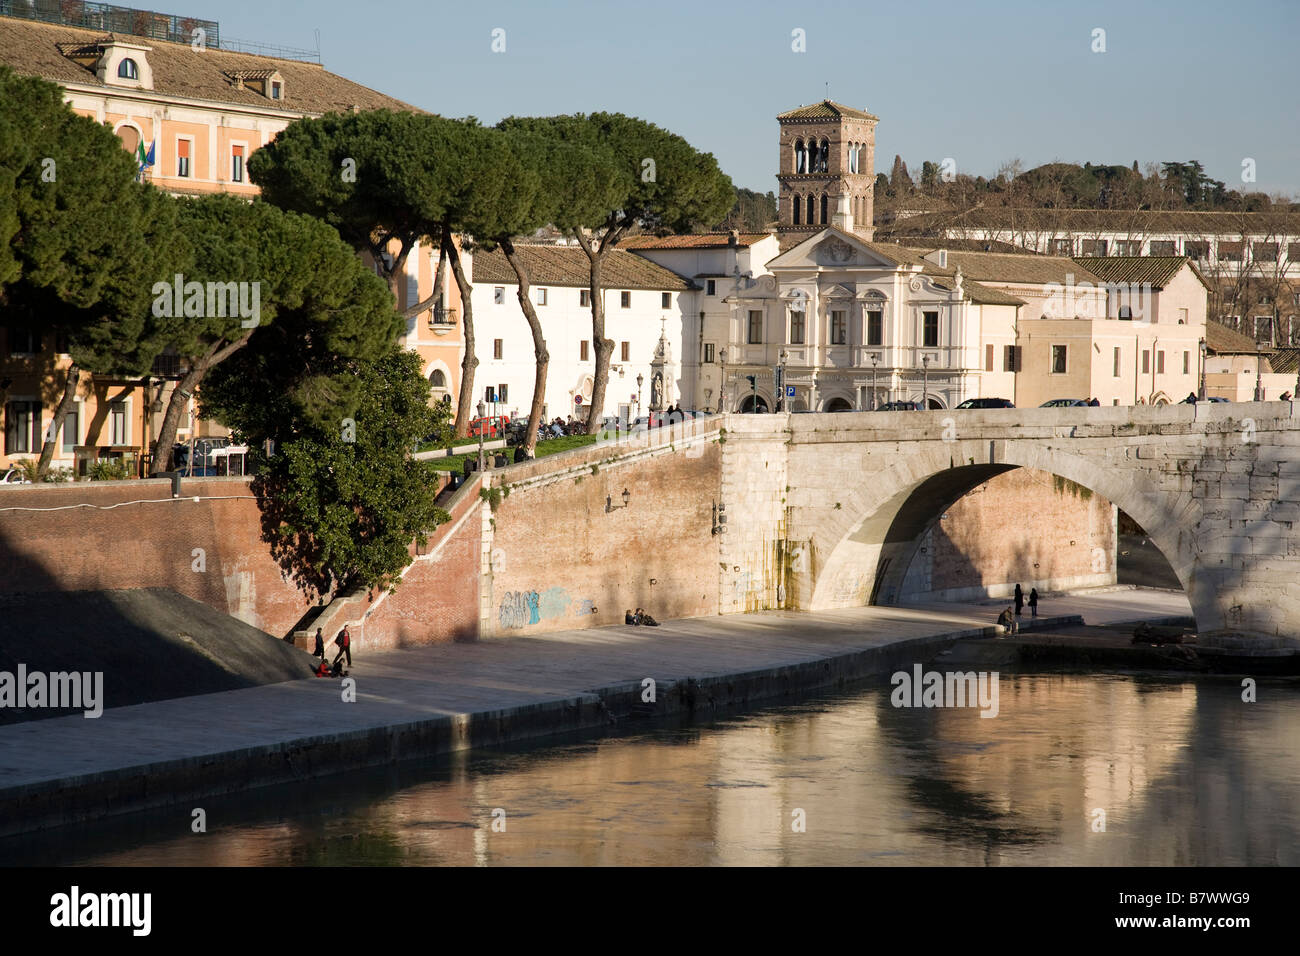 Tiberina island in the river Tiber in Rome with a span of the Ponte Cestio bridge Stock Photo